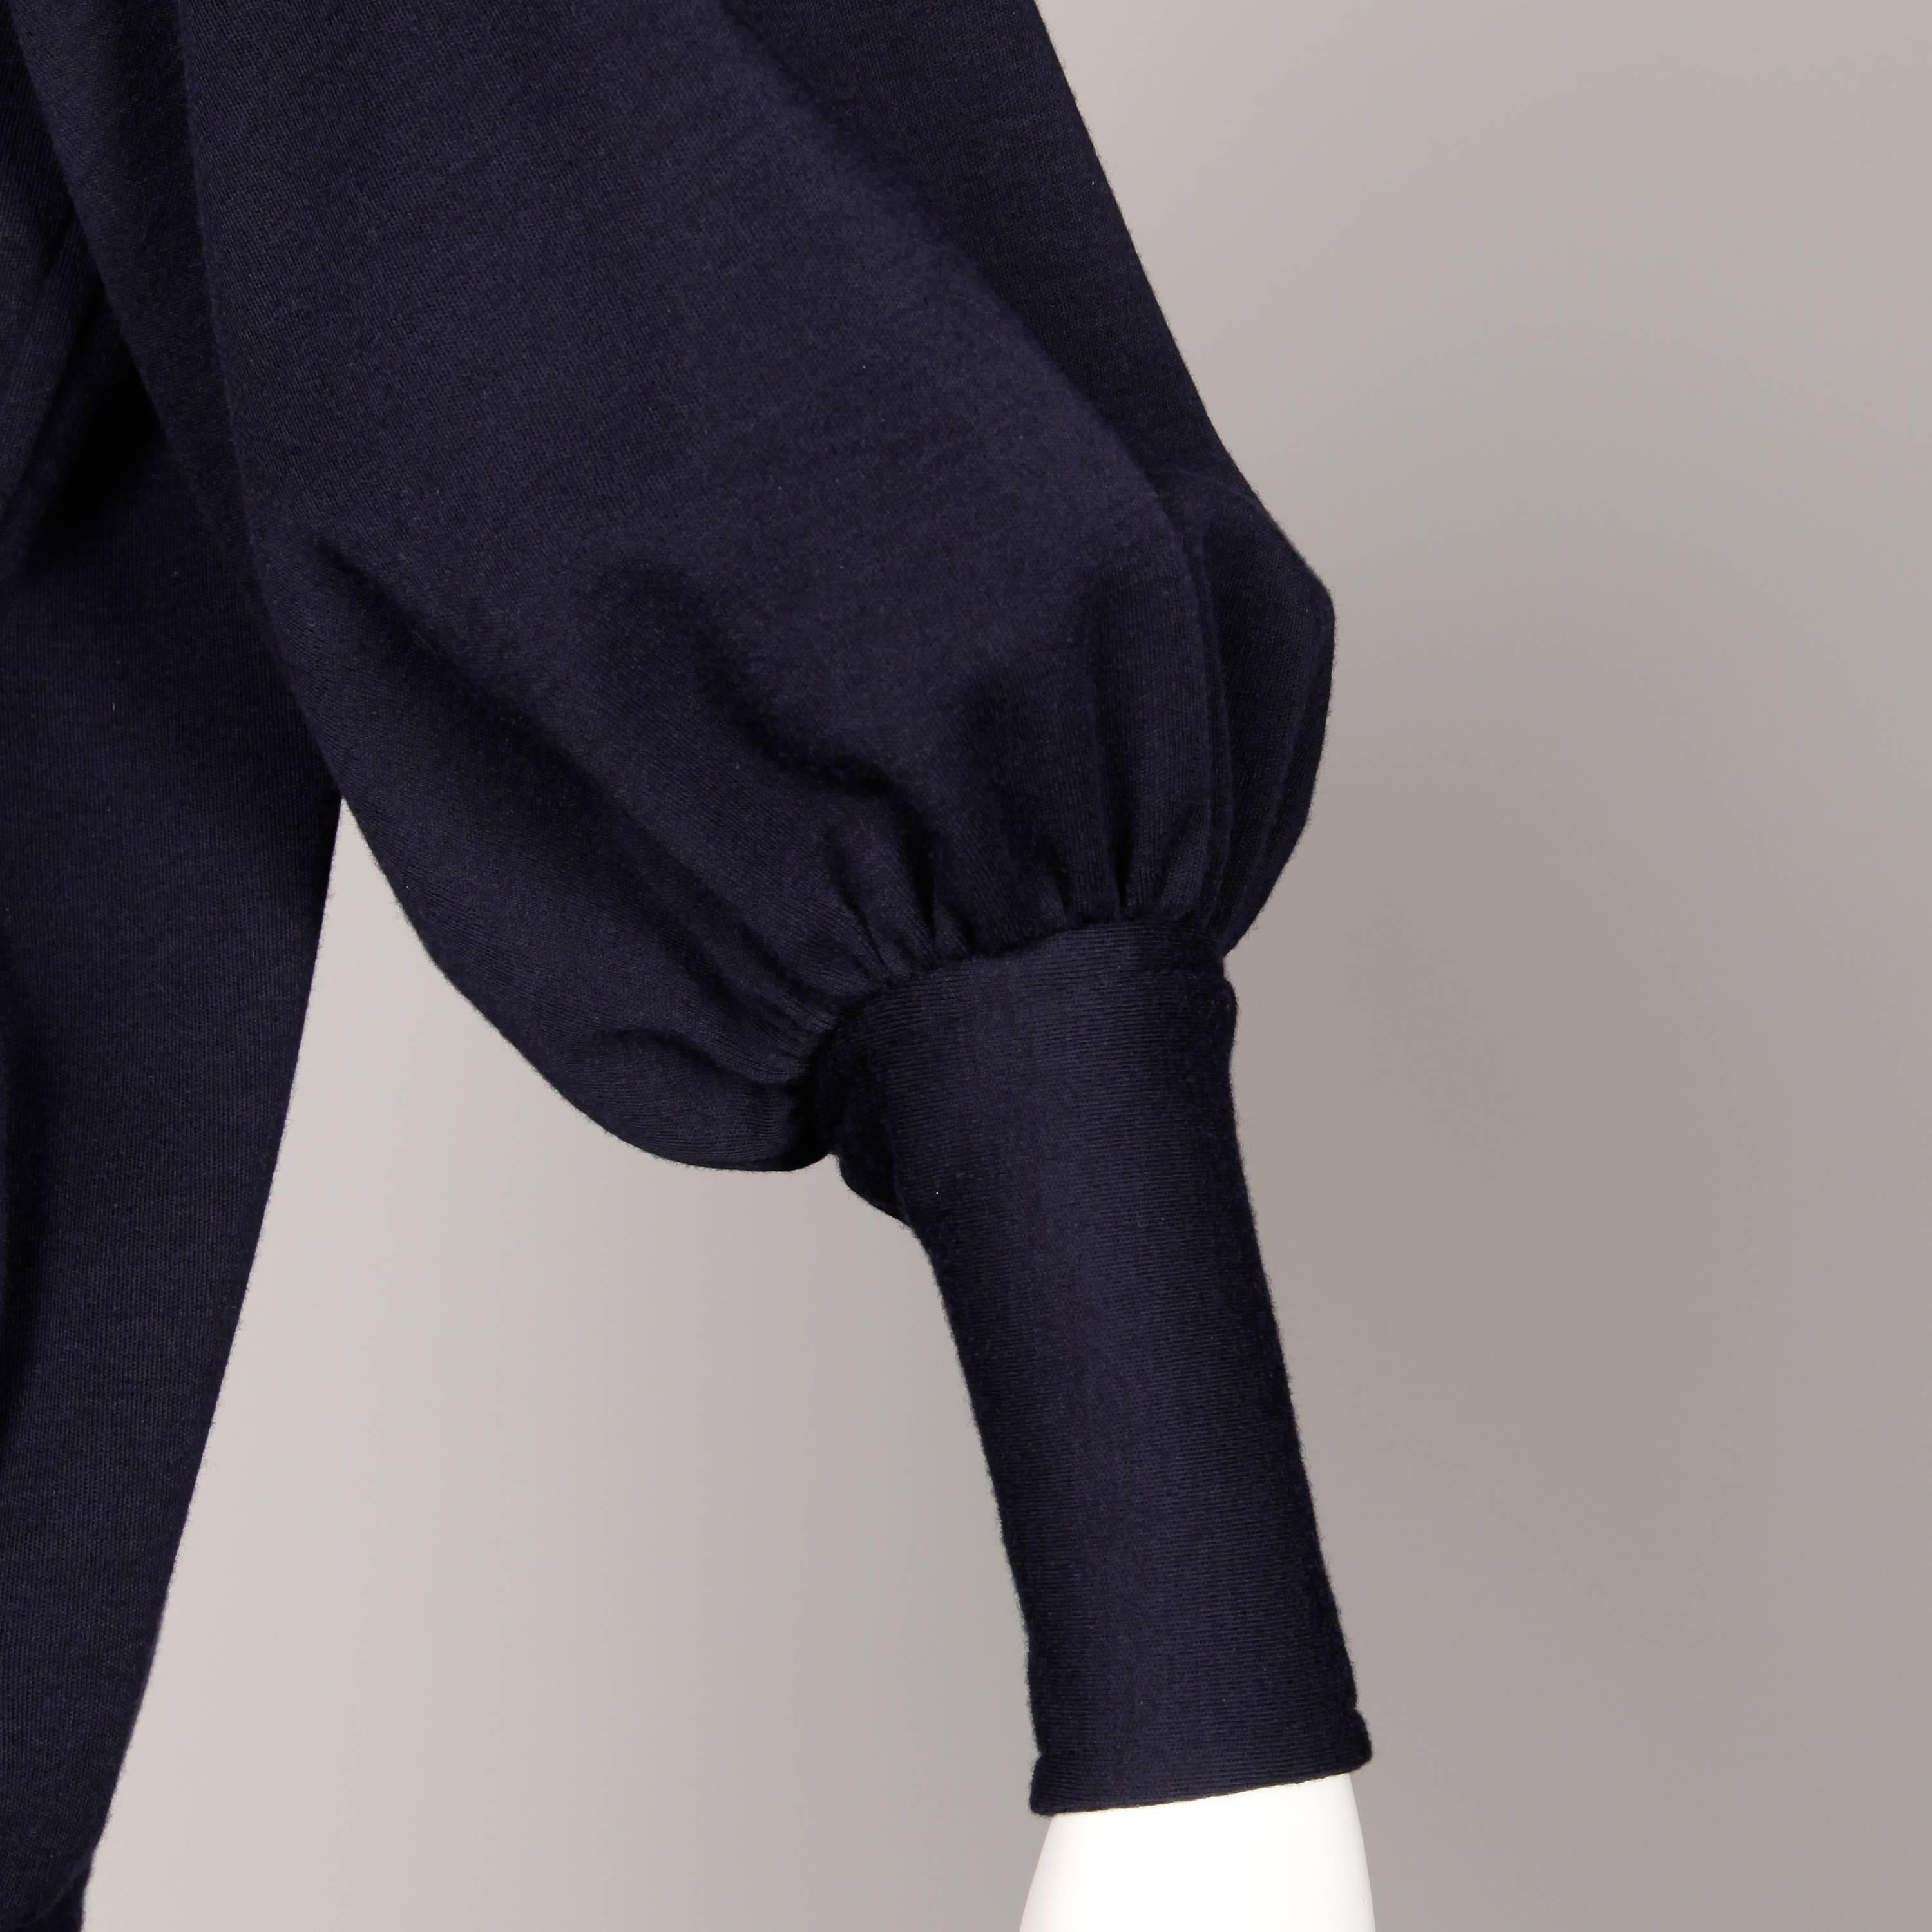 Black Yves Saint Laurent YSL Vintage Navy Blue Wool Knit Sweater or Jumper Top